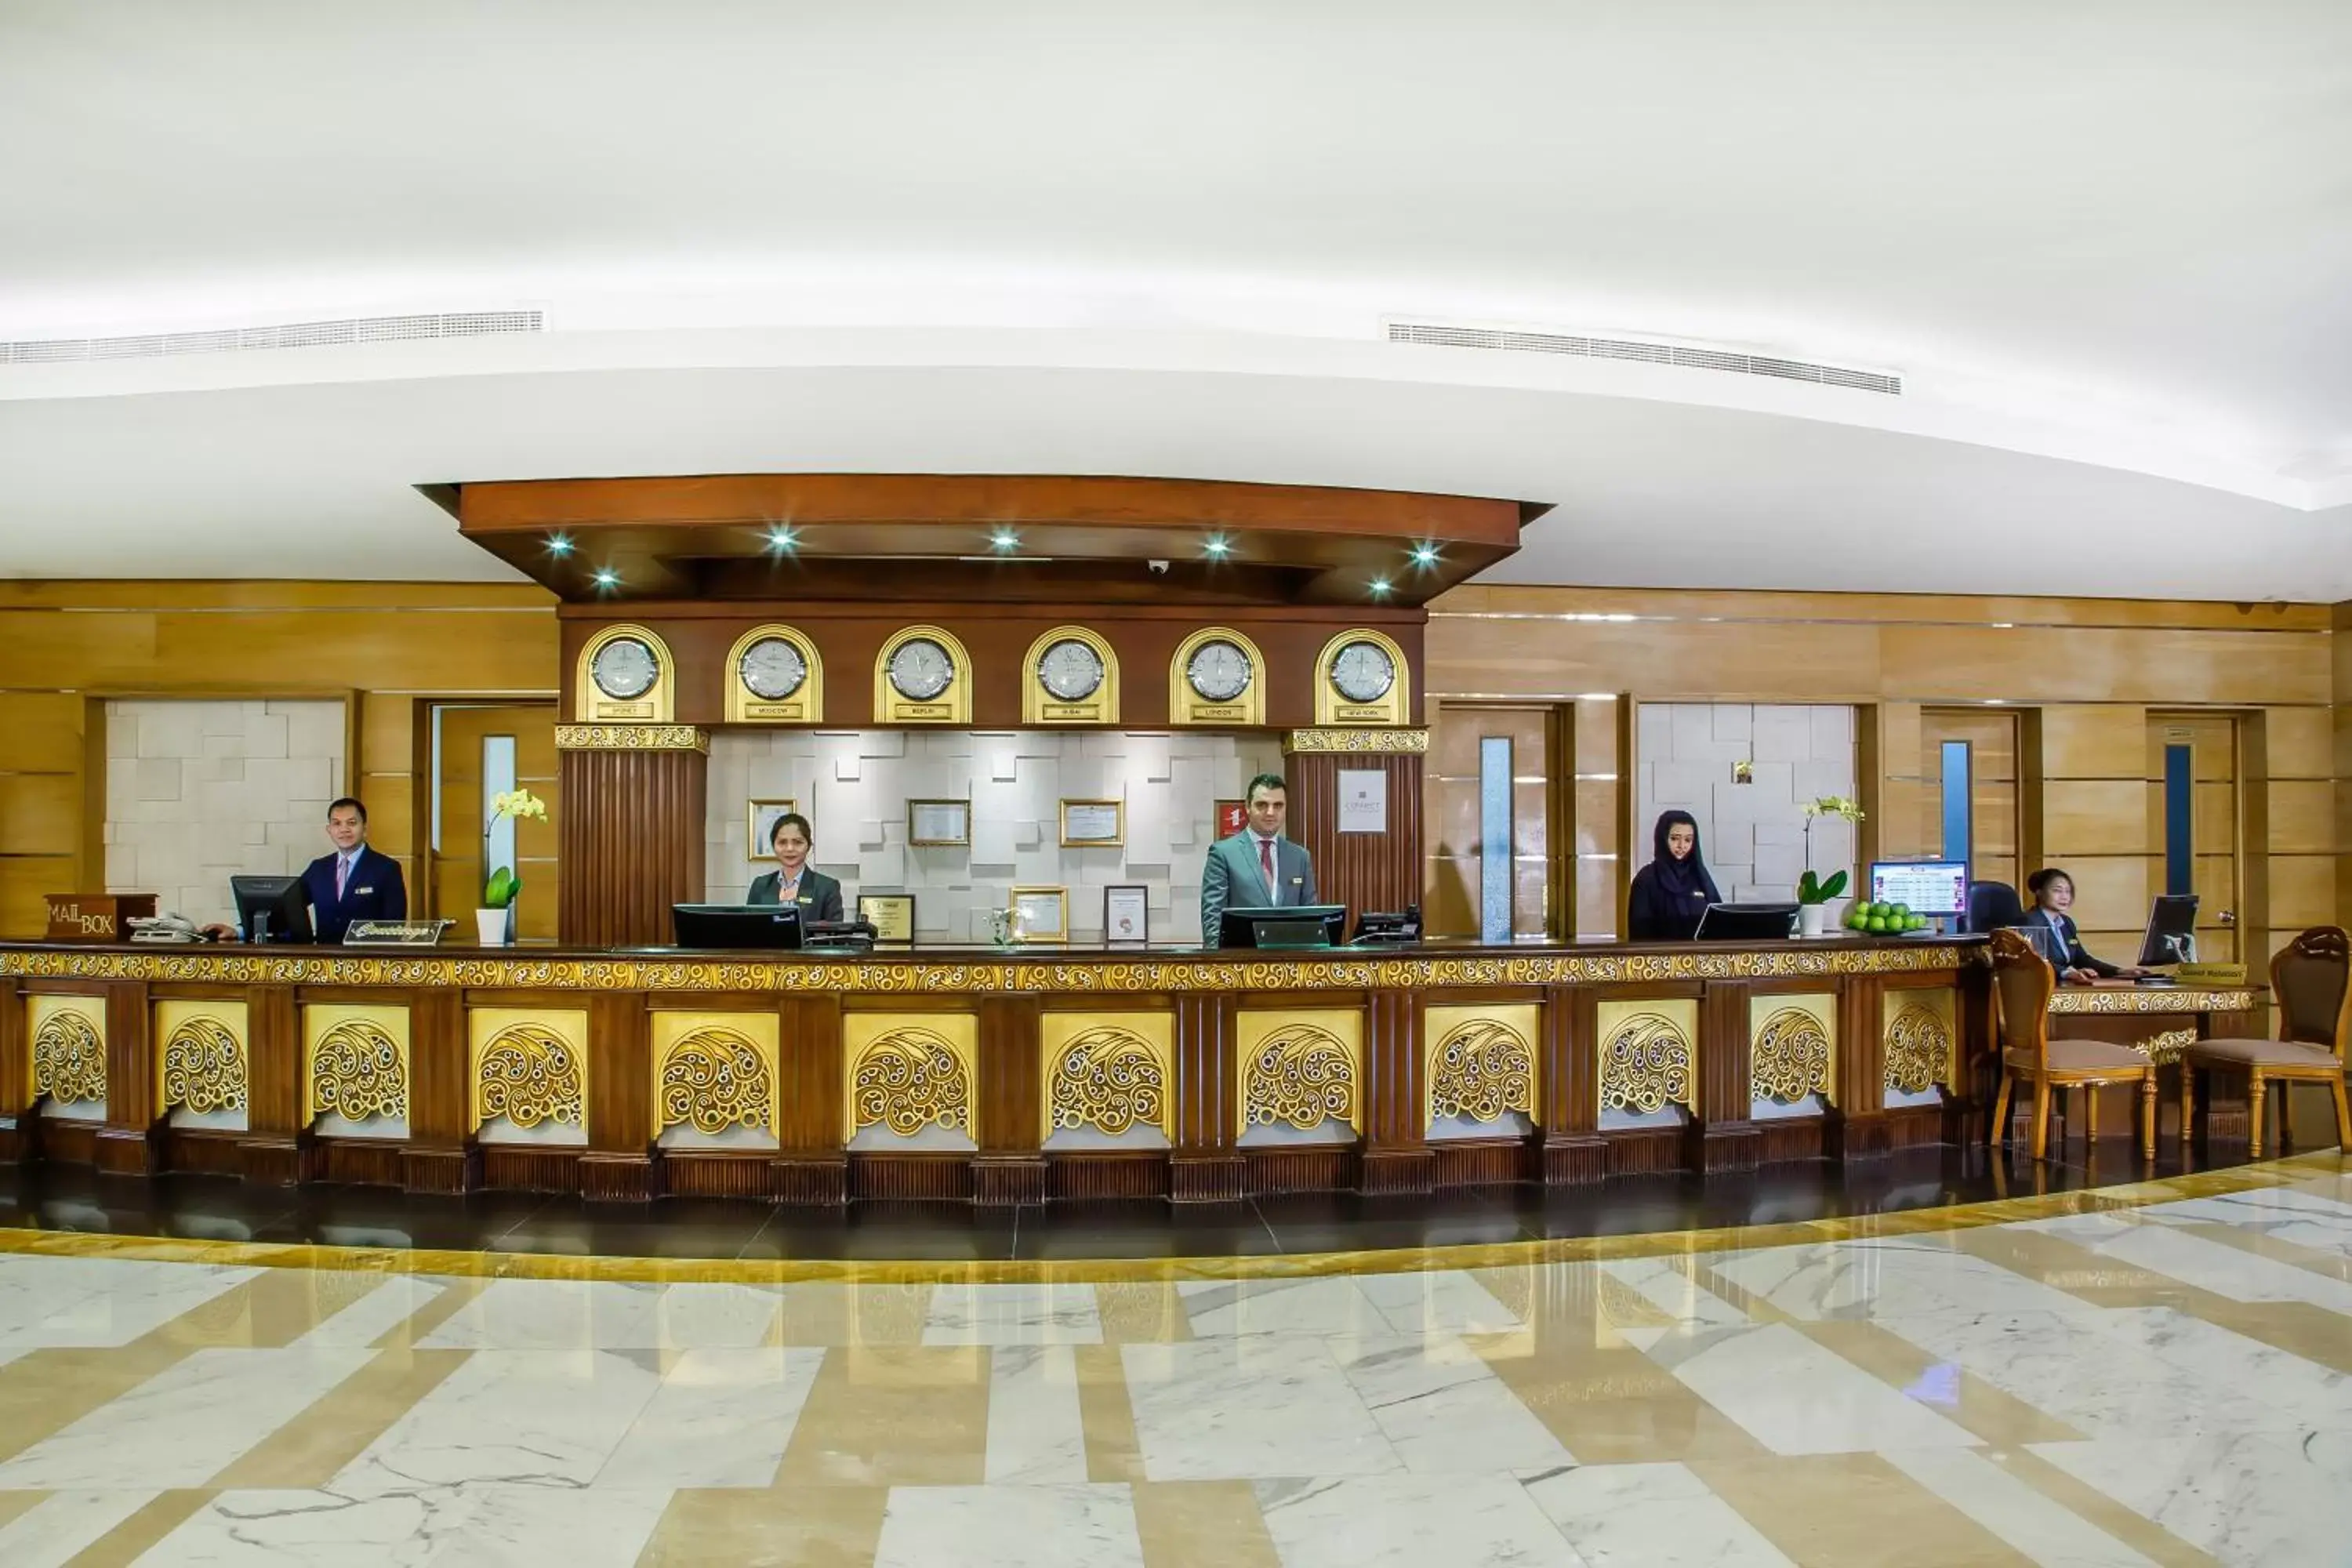 Lobby or reception in Grand Excelsior Hotel - Bur Dubai